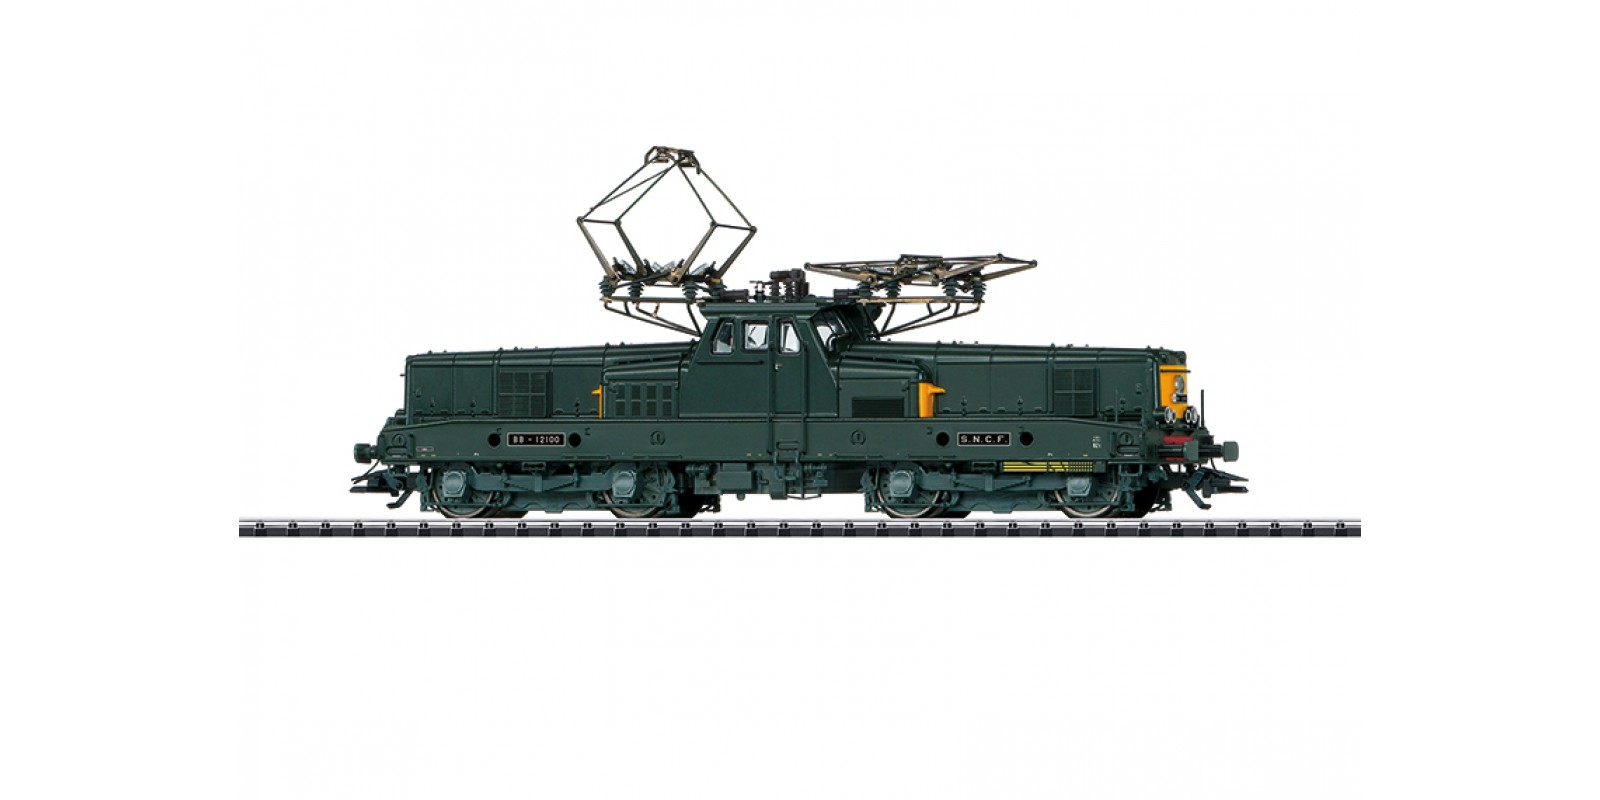 T22327 Class BB 12000 "Bügeleisen" / "Flat Iron" Electric Locomotive